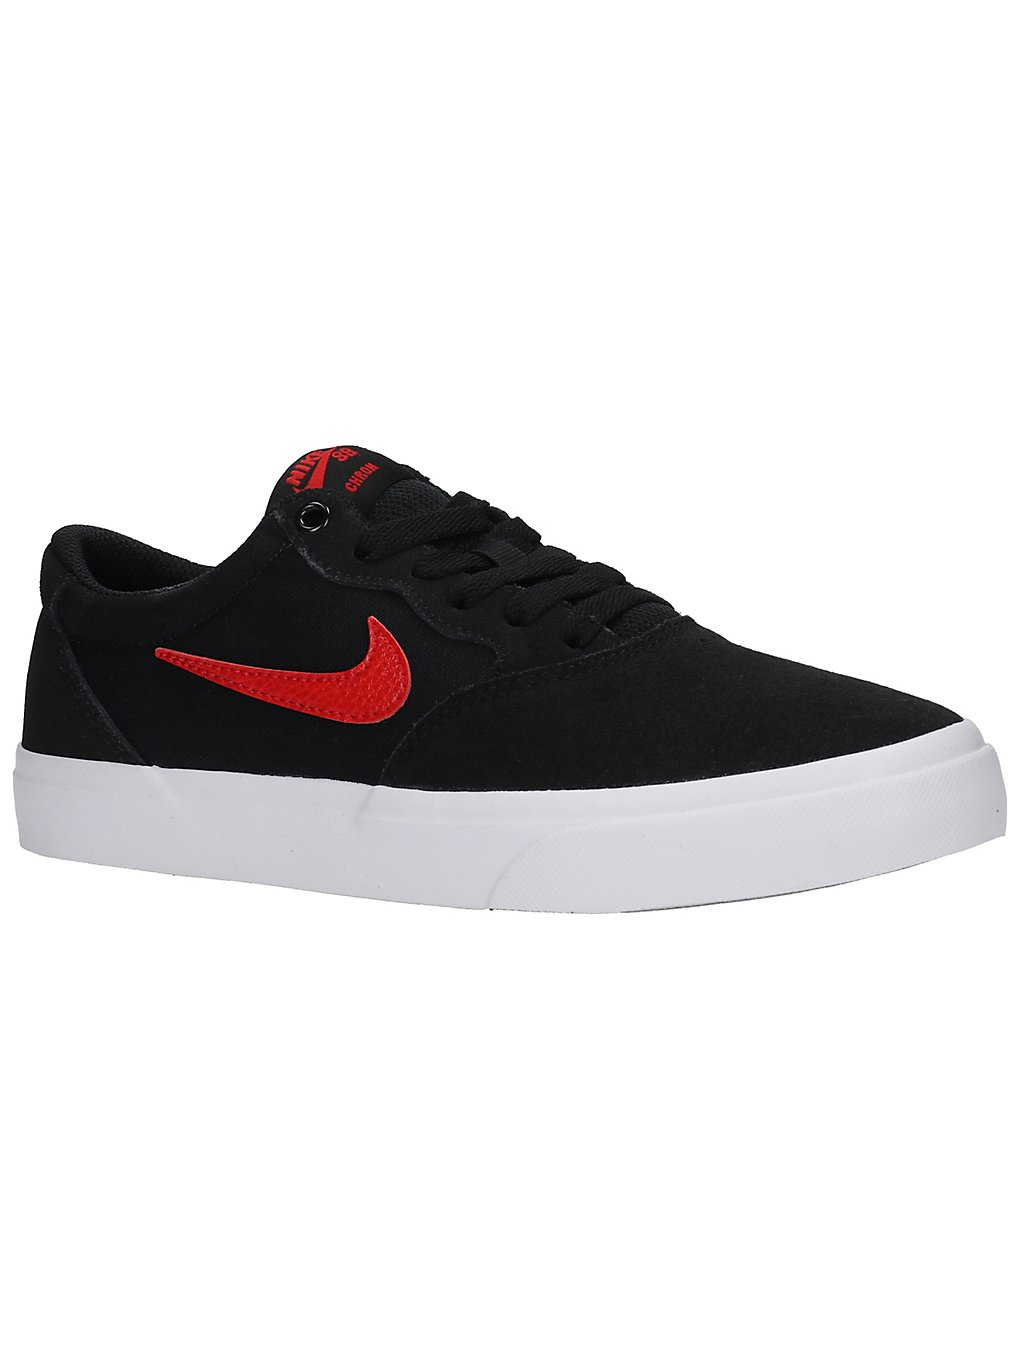 Nike Nike SB Chron Solarsoft Skate Shoes black/university red